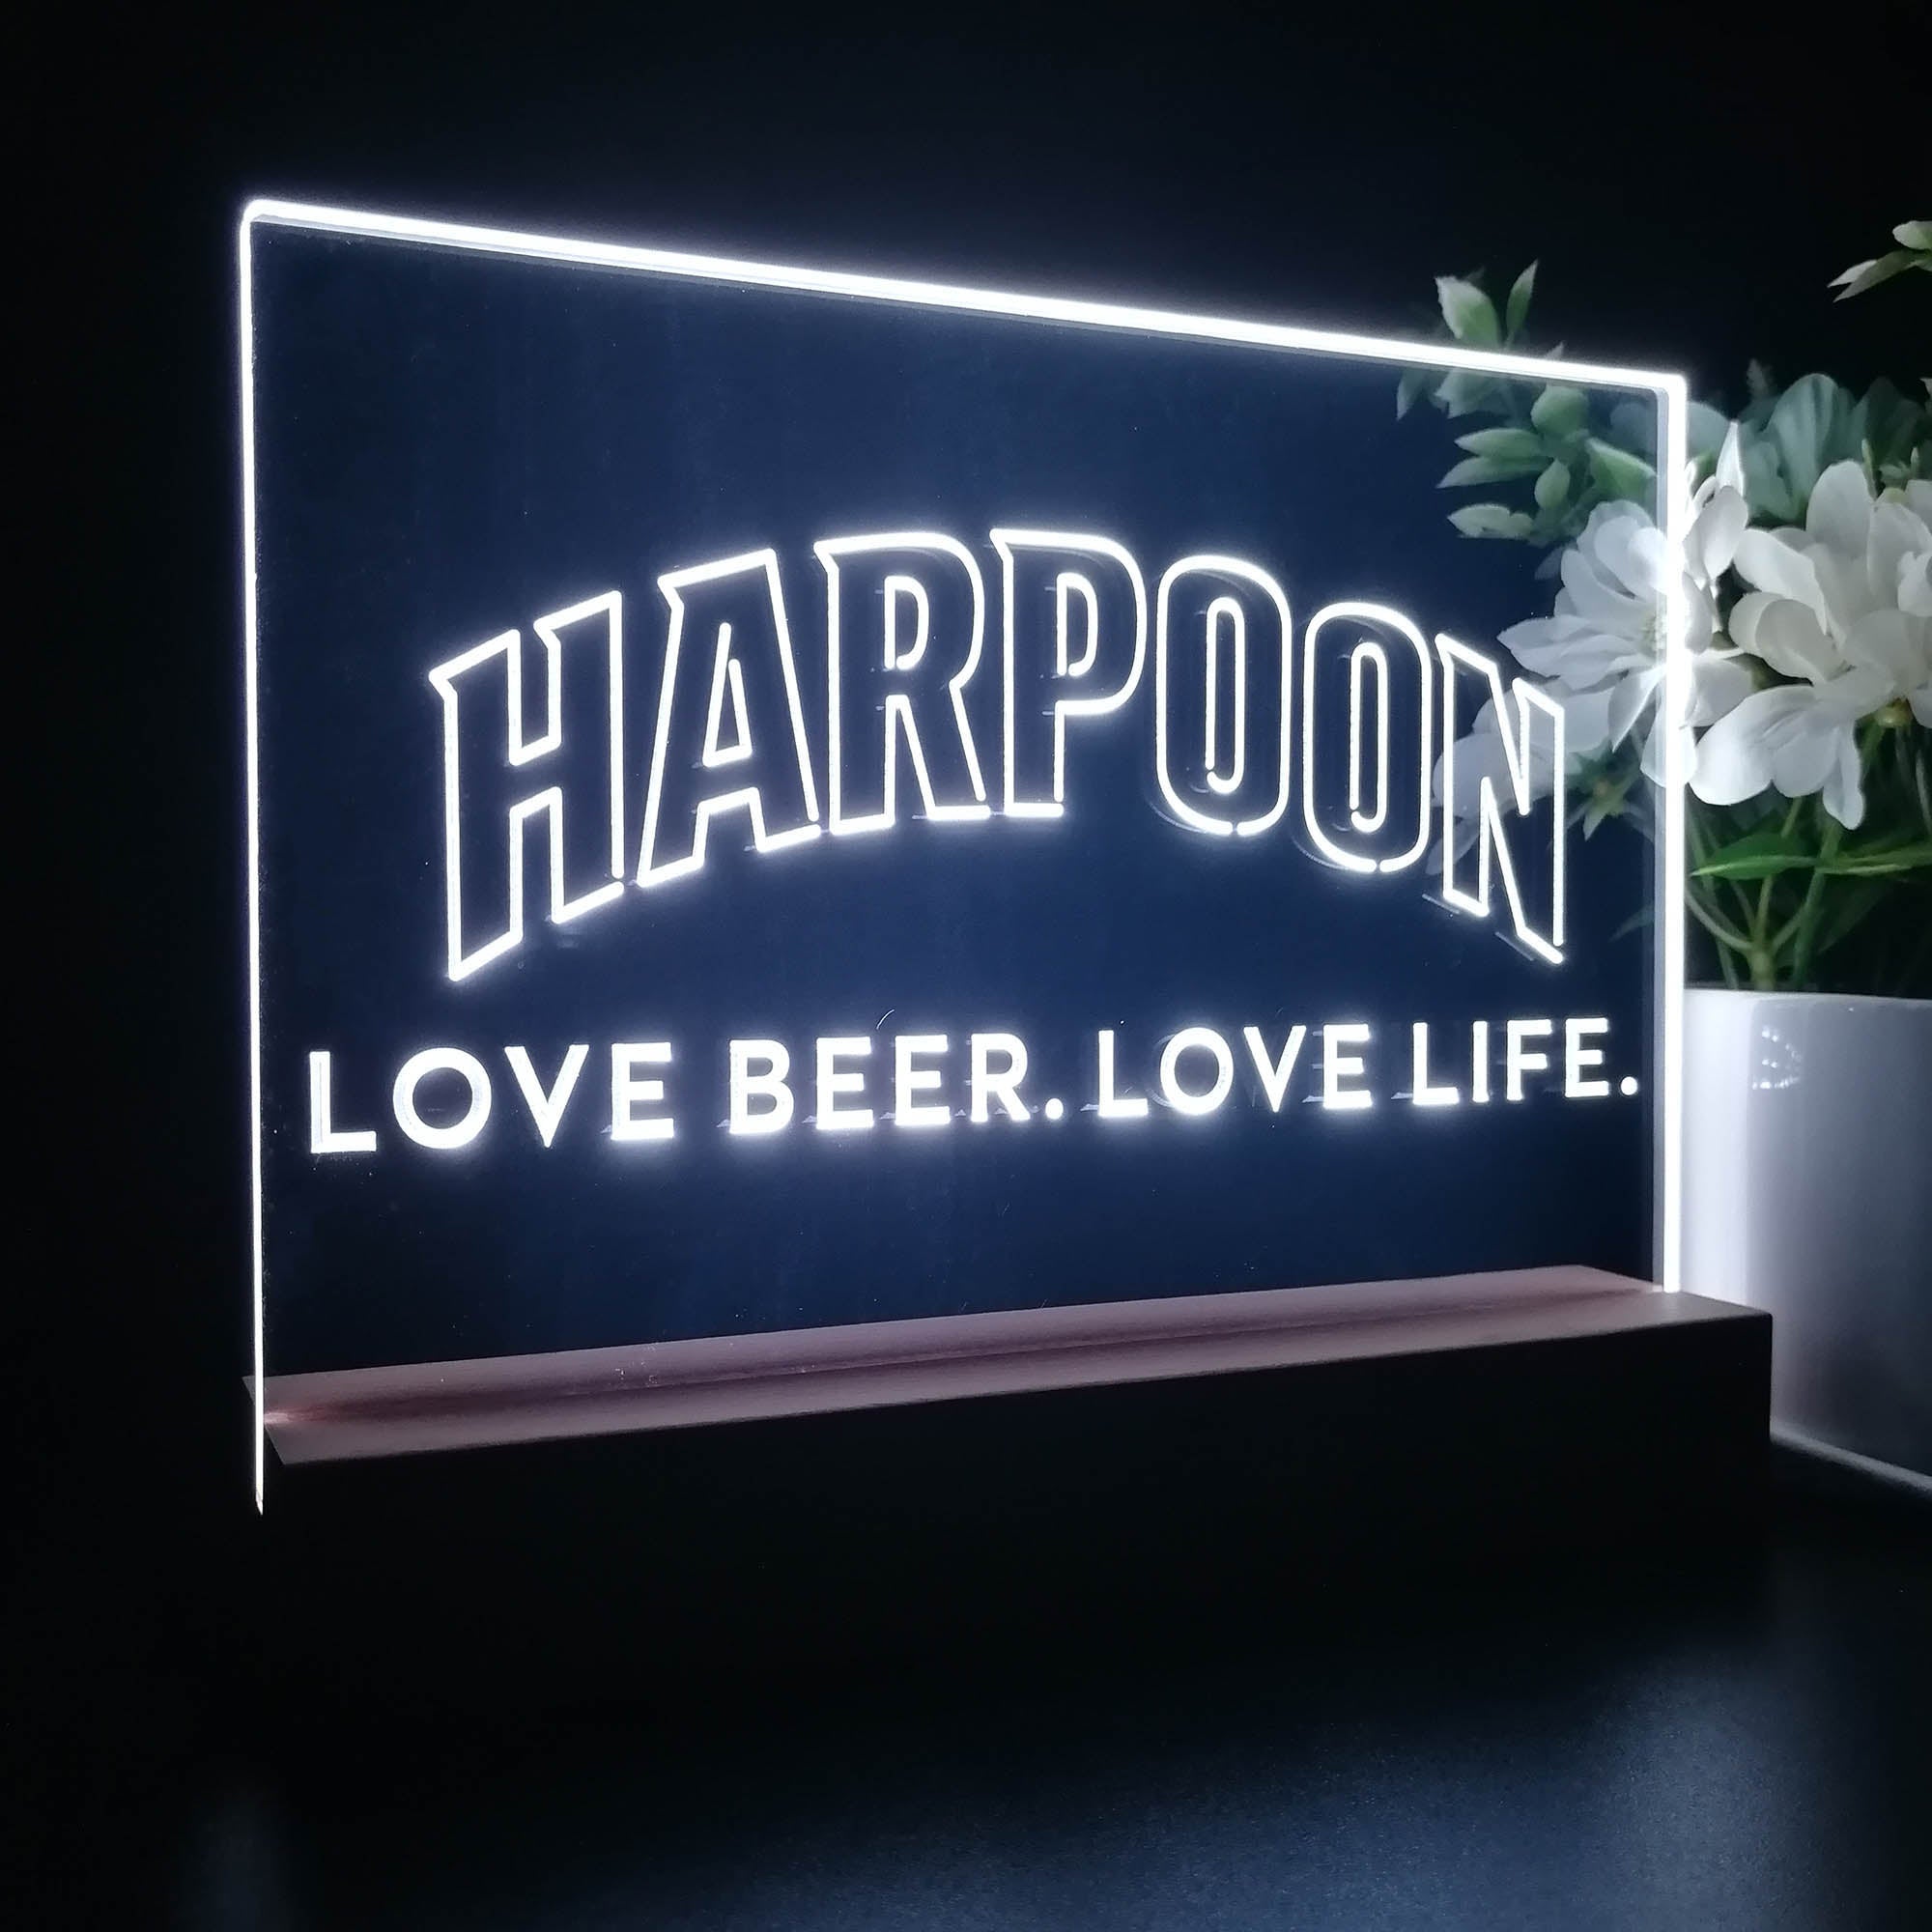 Harpoon Brewery Neon Sign Pub Bar Decor Lamp